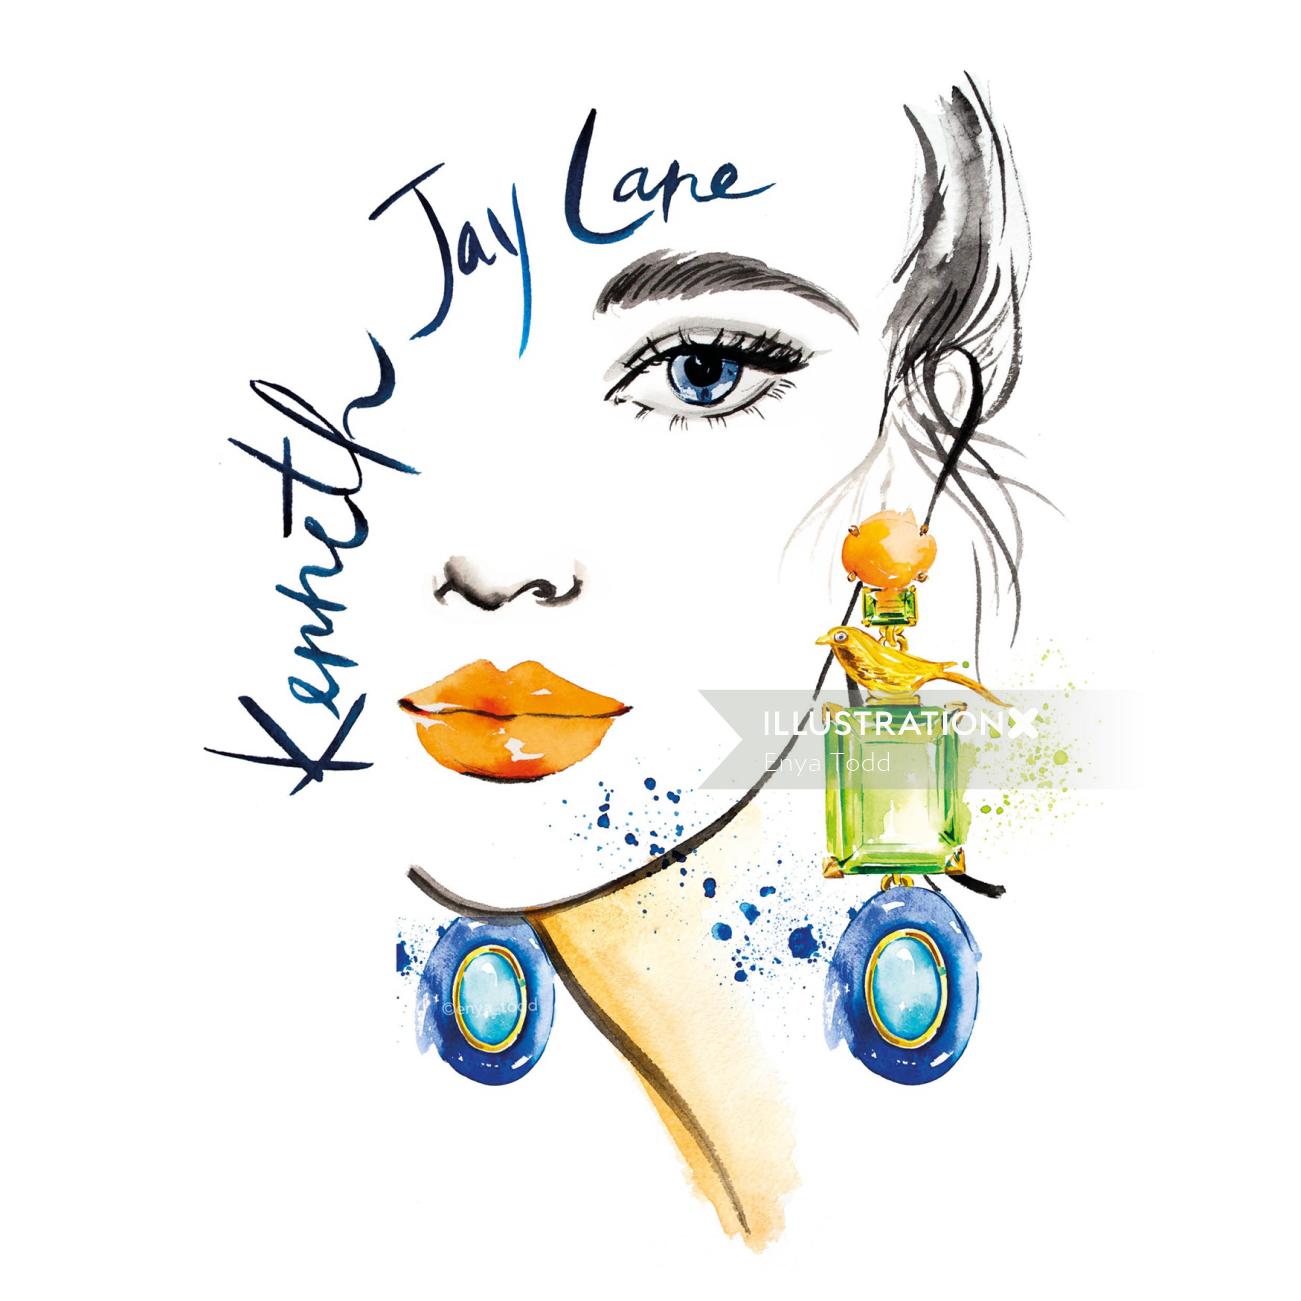 Advertising illustration of Kenneth Jay Lane jewelry